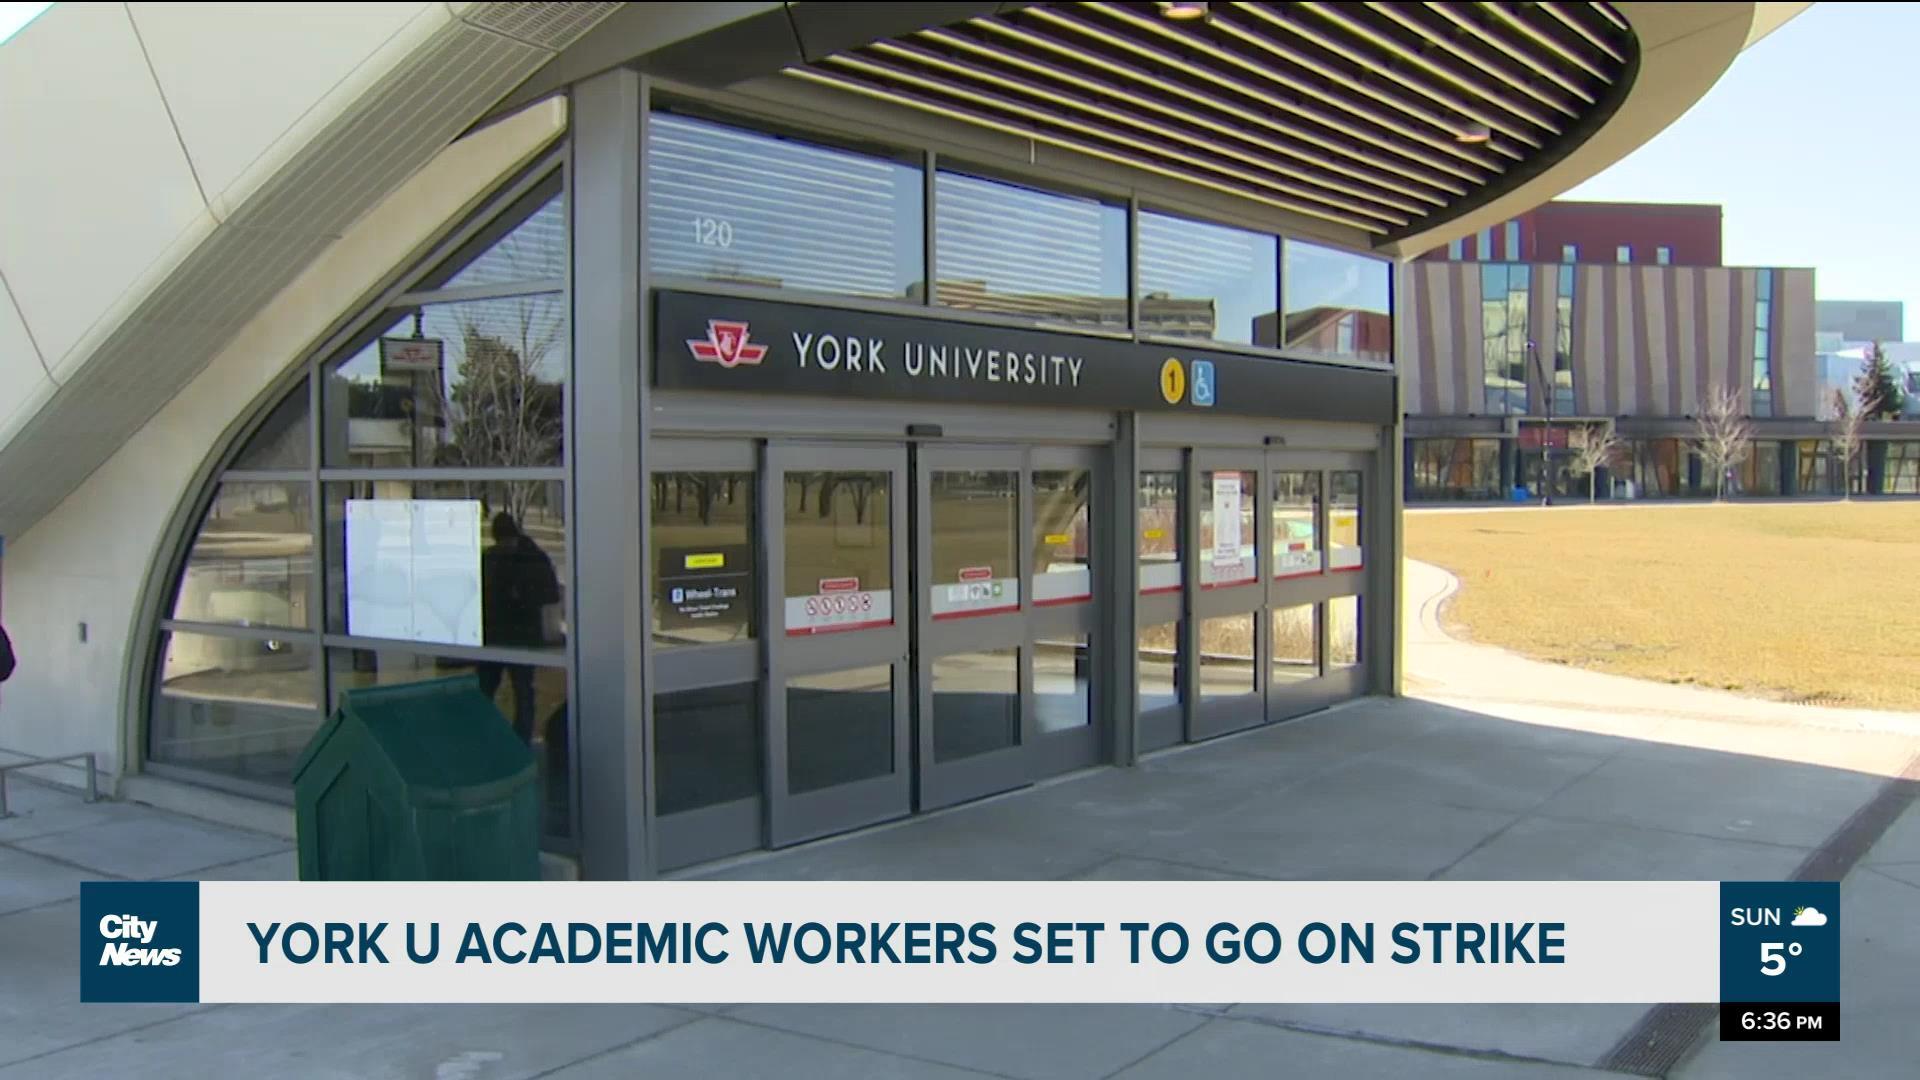 York U academic workers set to go on strike